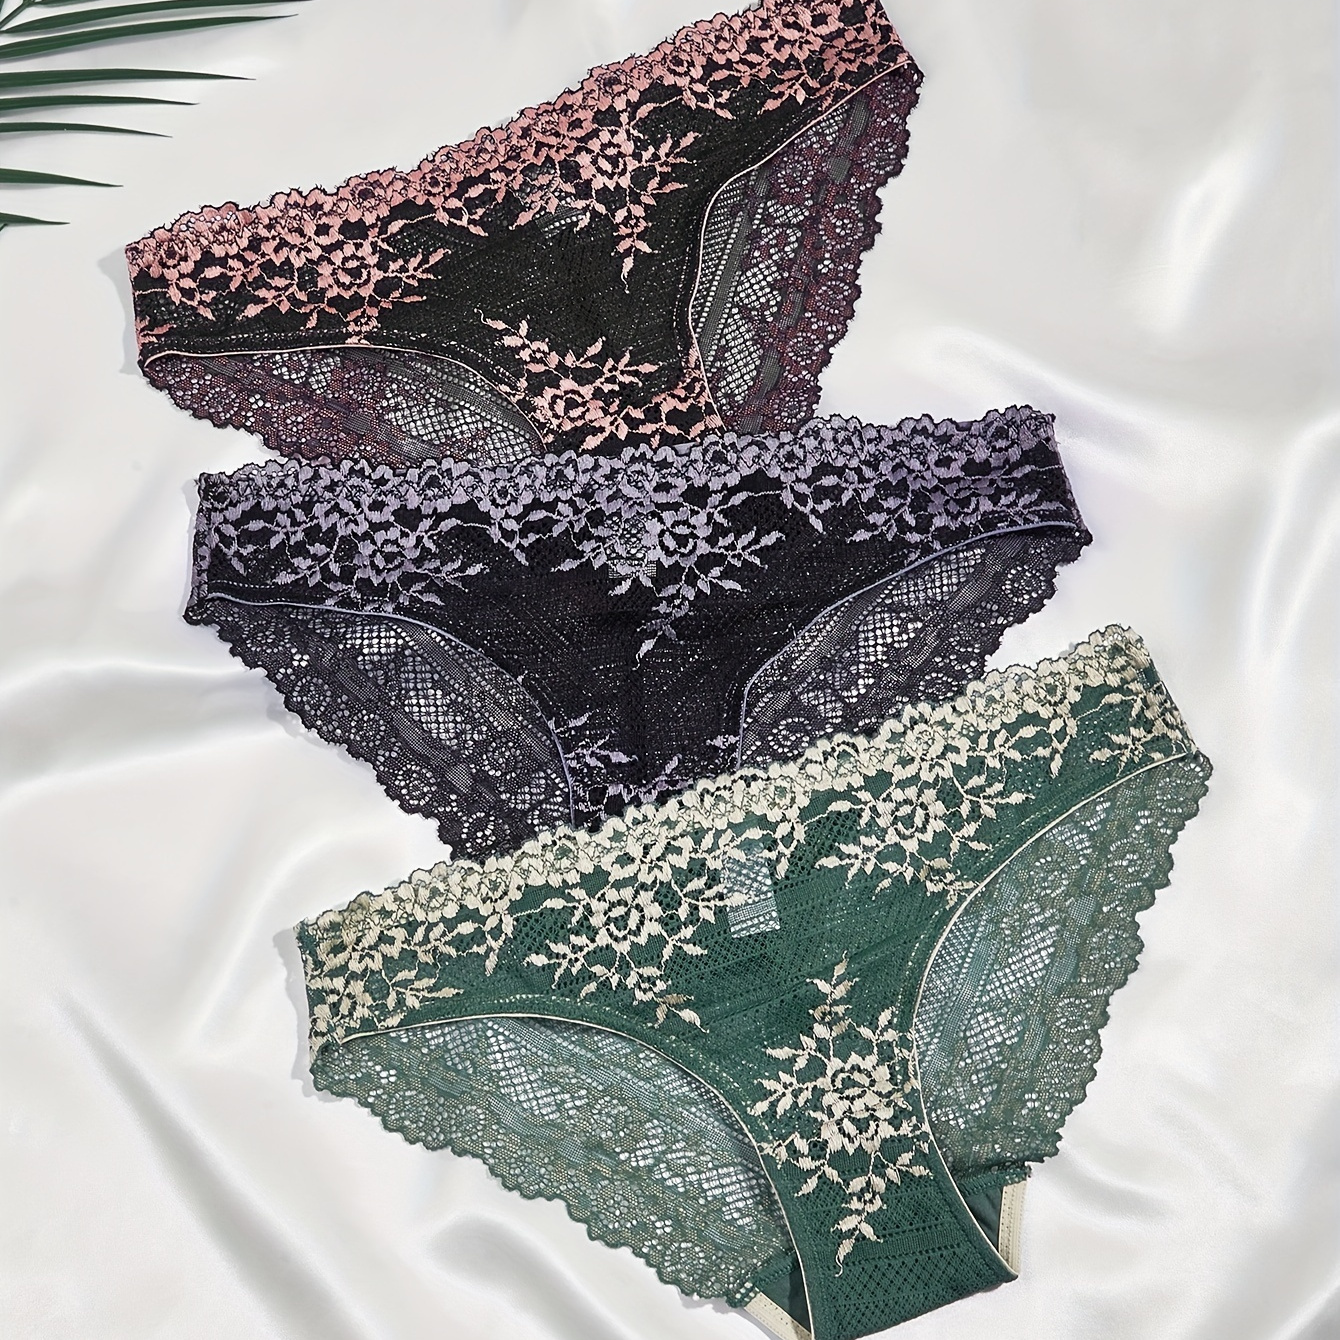 

3pcs Contrast Lace Briefs, Comfy & Breathable Stretchy Intimates Panties, Women's Lingerie & Underwear